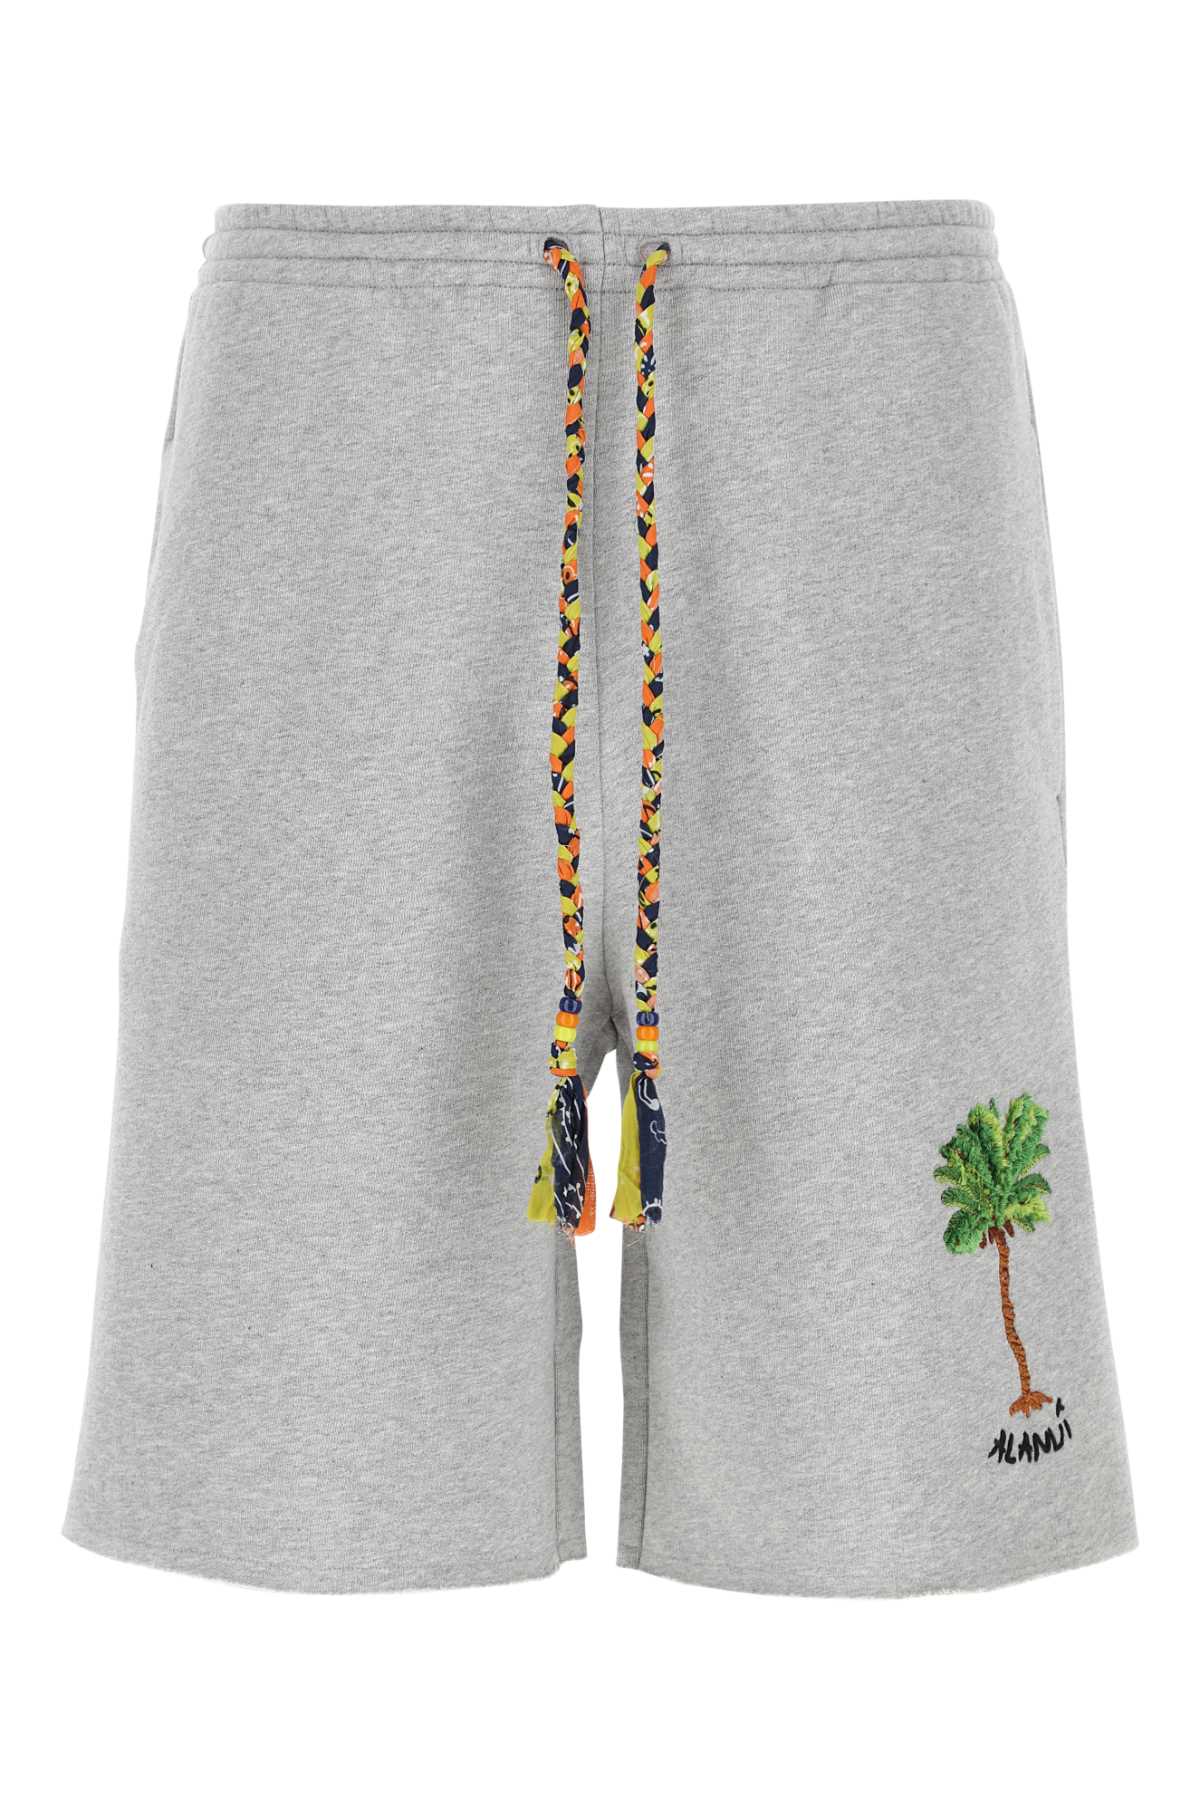 Melange Grey Stretch Cotton Stay Positive Bermuda Shorts